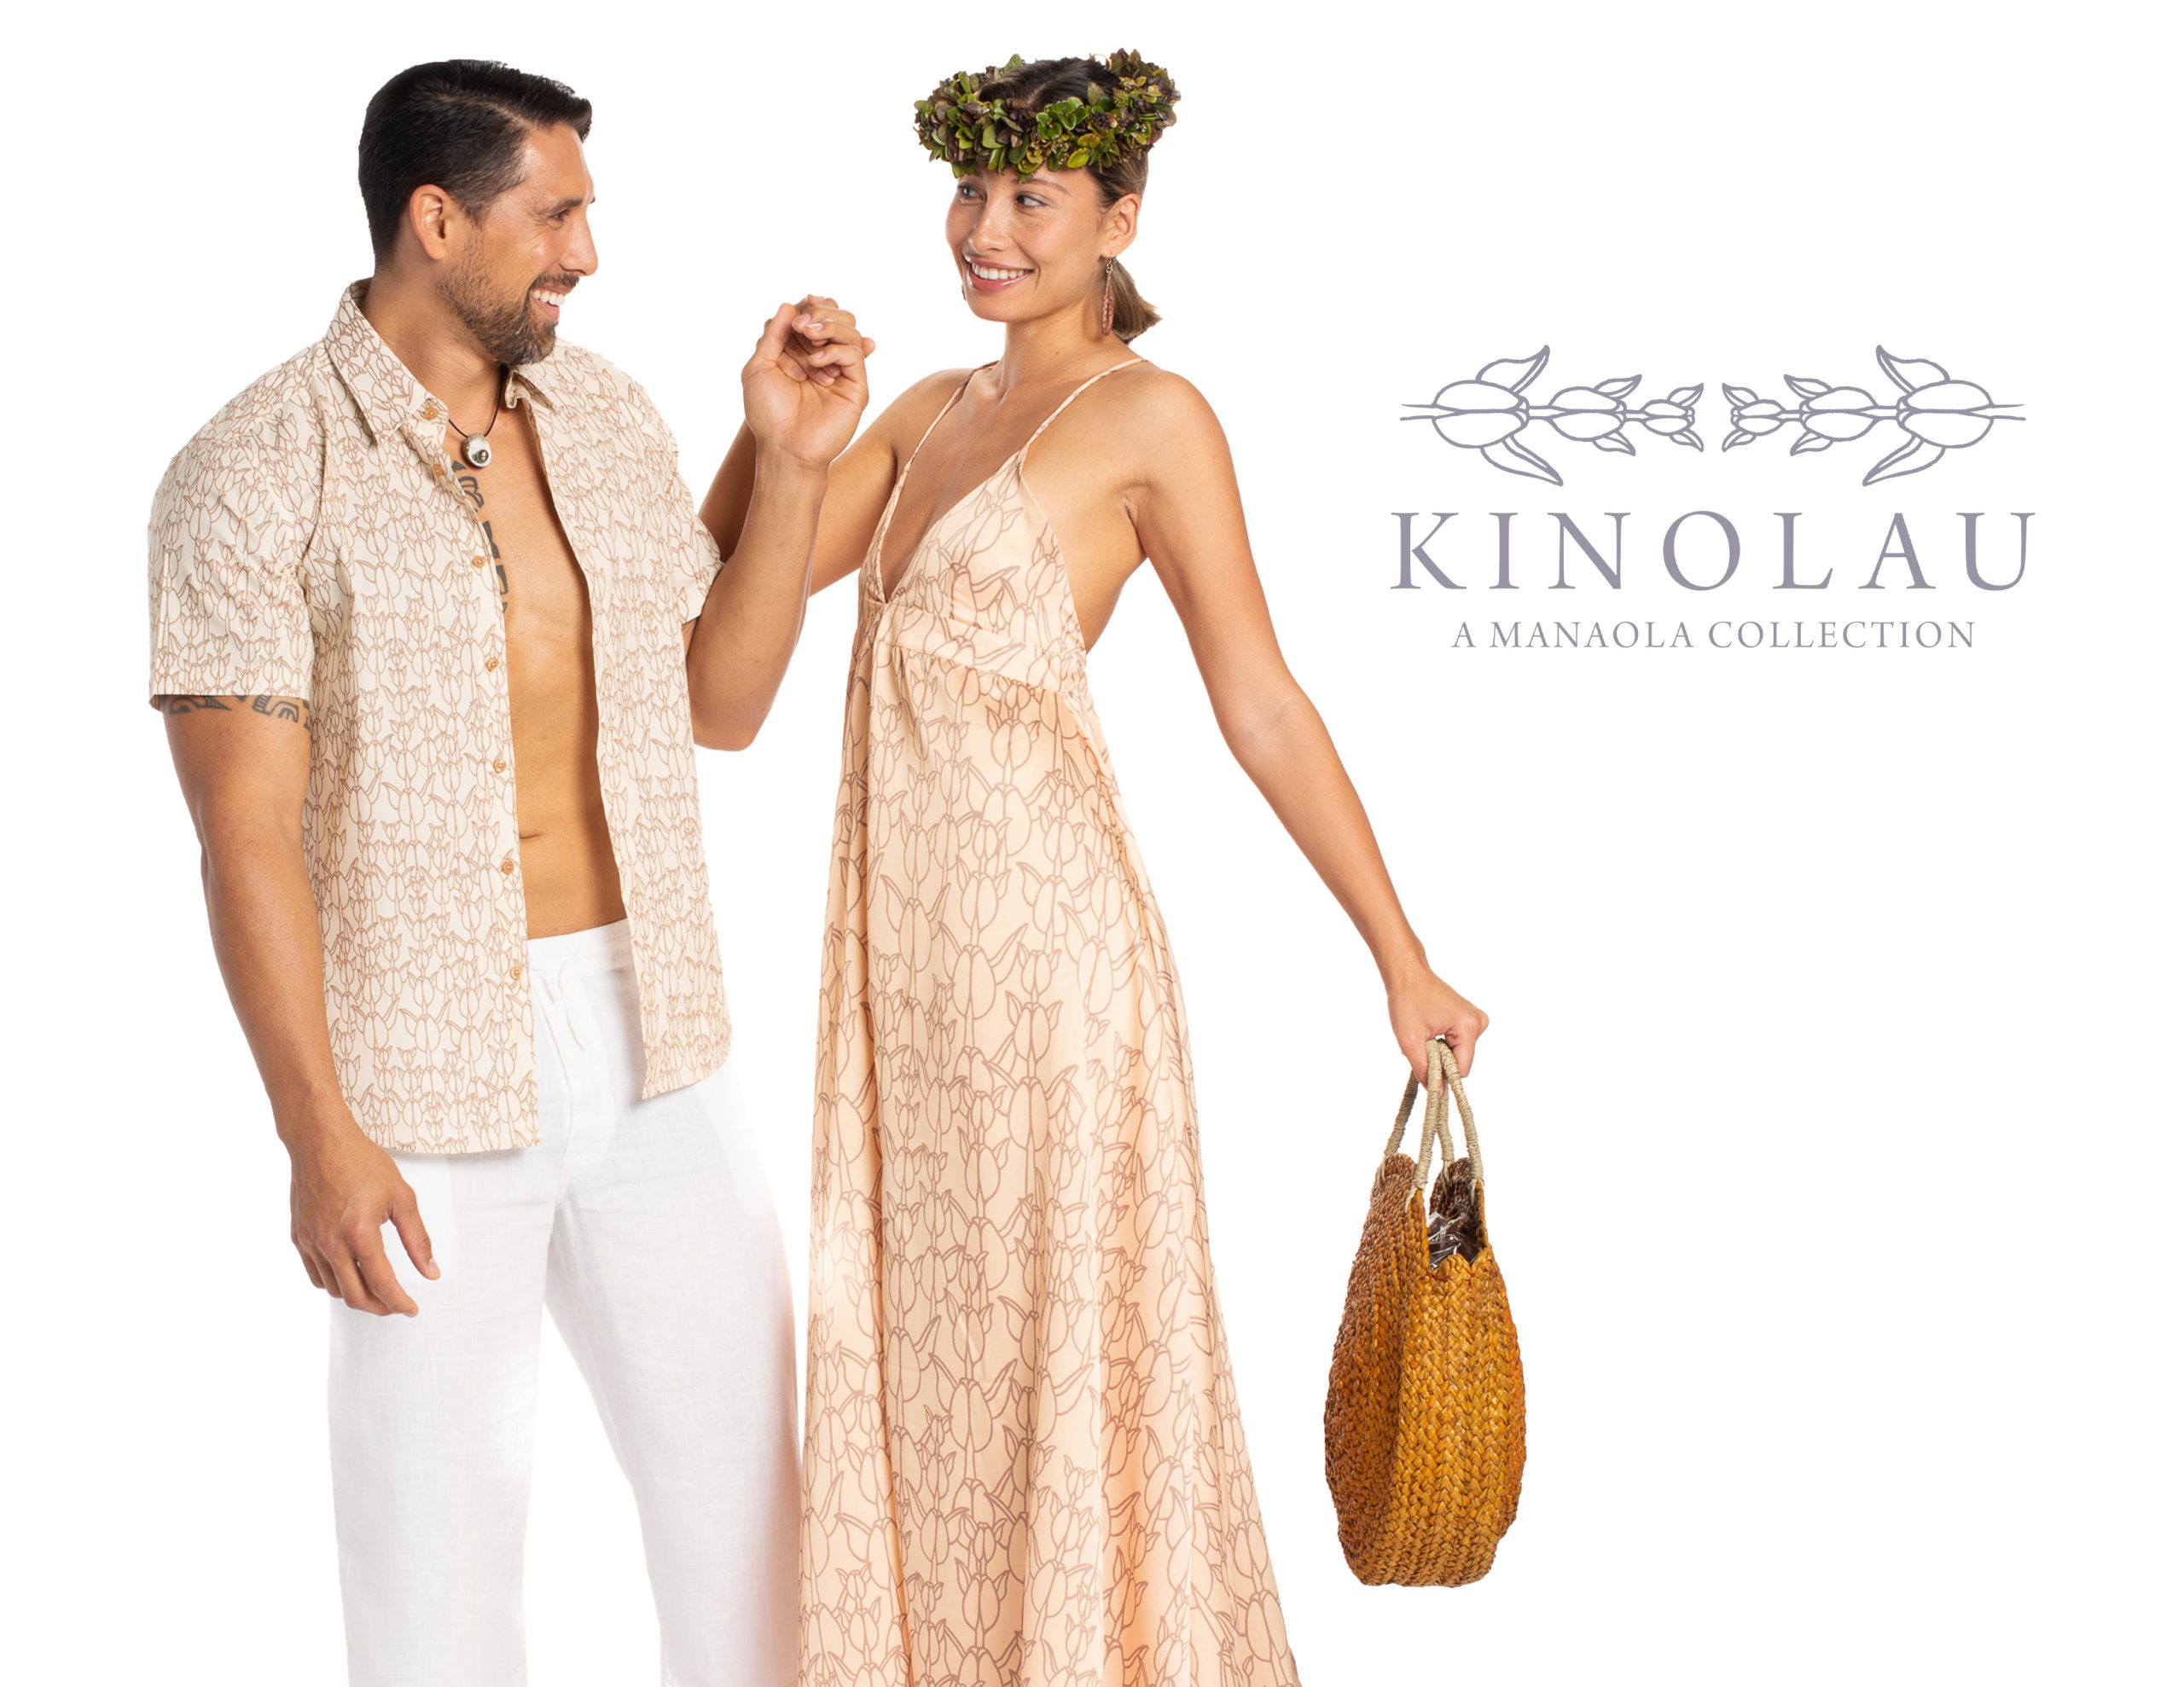 Kinolau "A Manaola Collection" Flyer